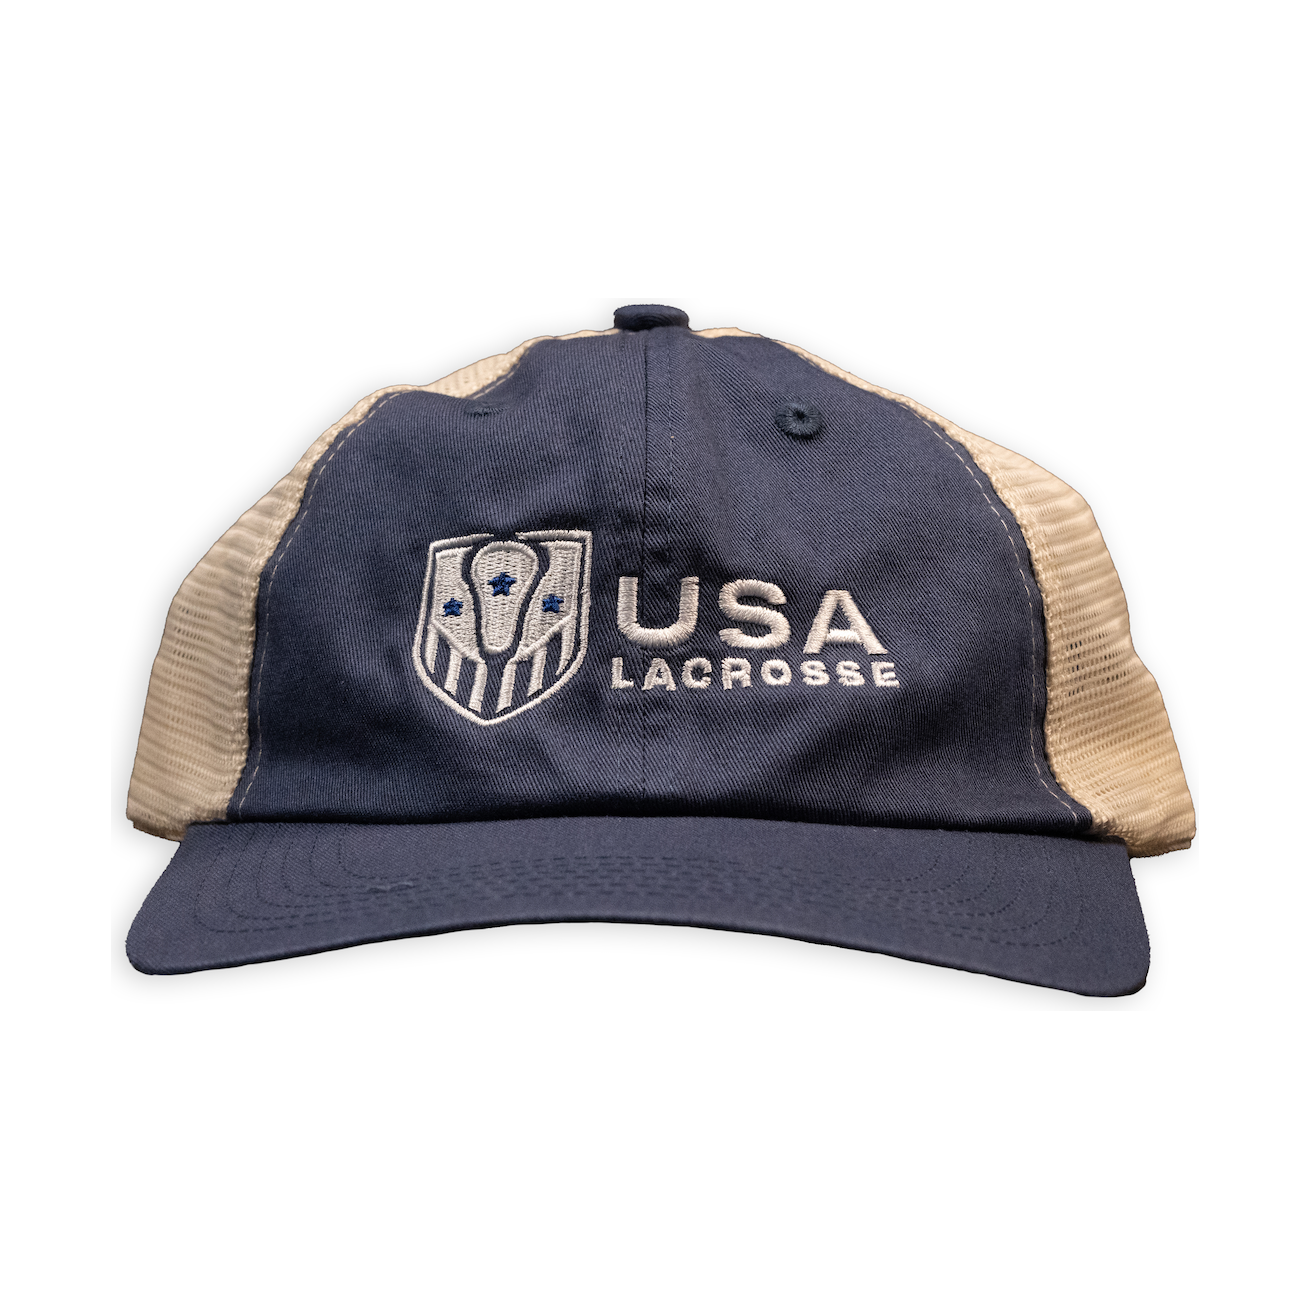 USA Lacrosse Mesh Back Hat*